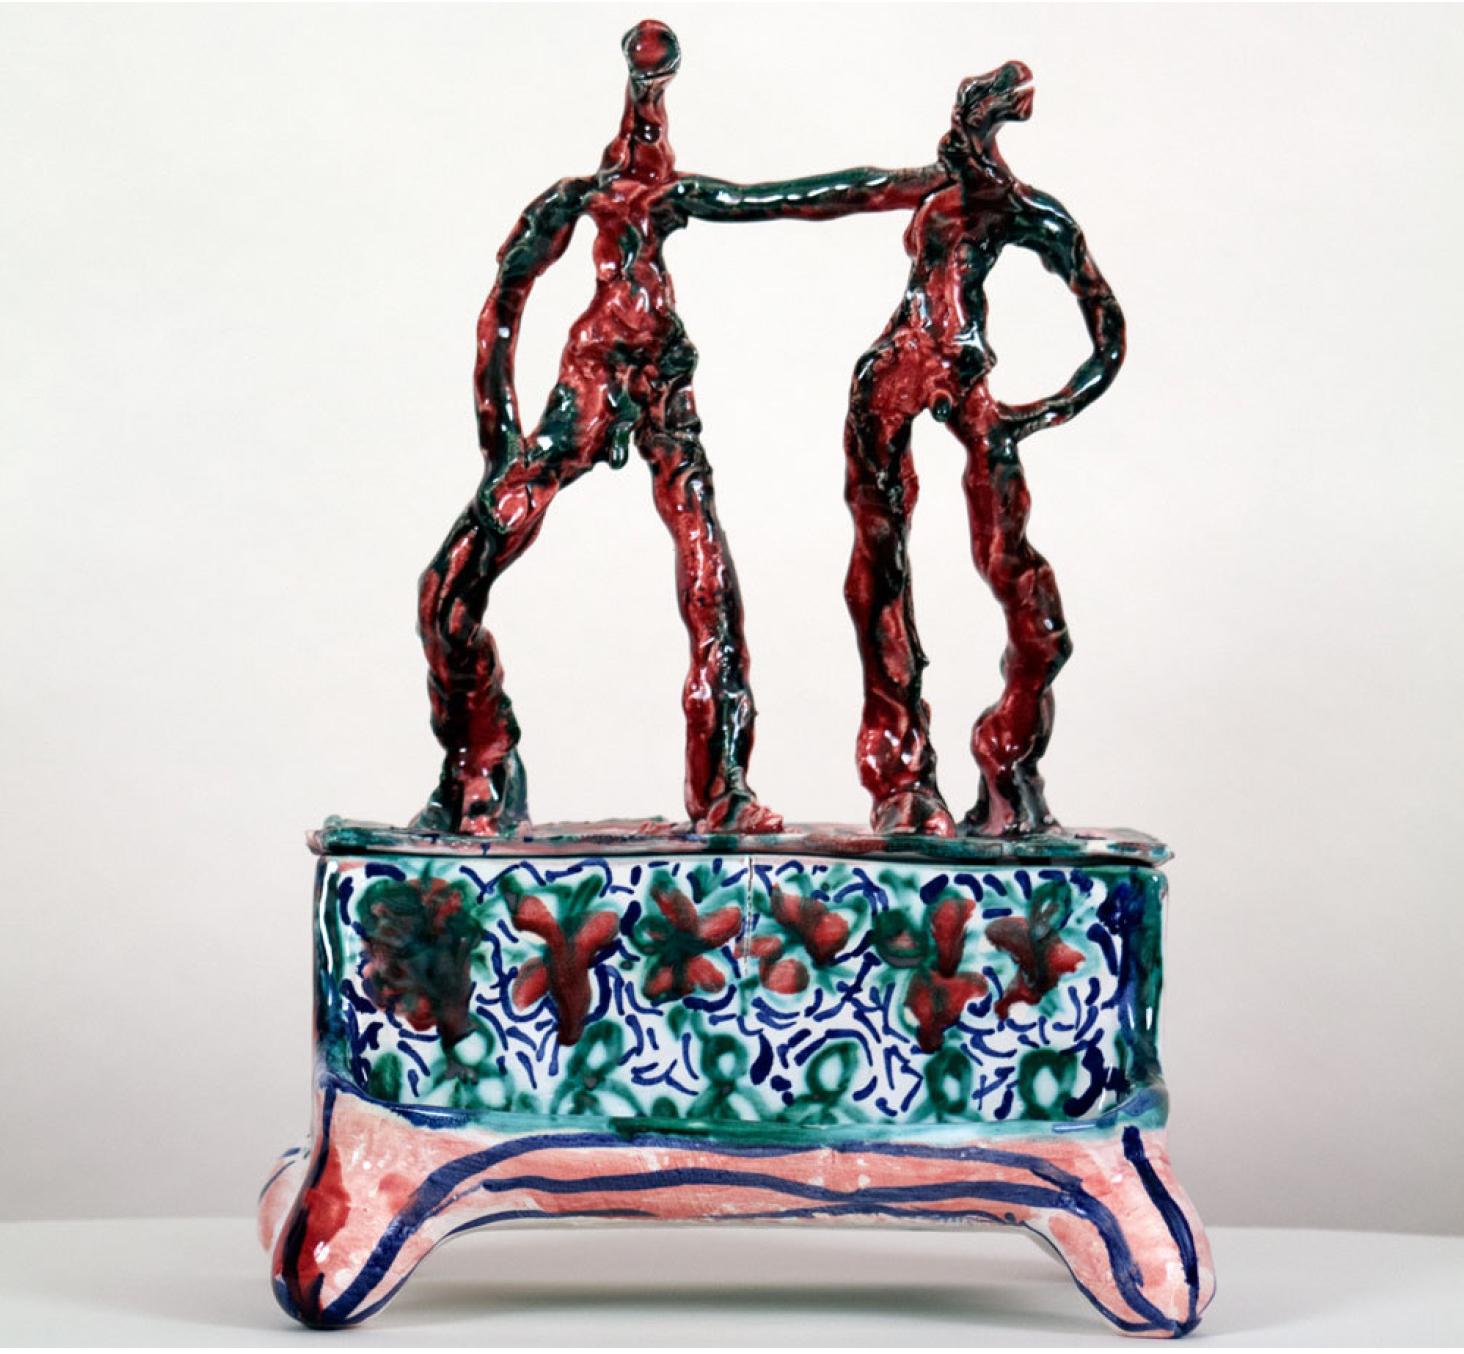 "DESK SET I", majolica glazed earthenware sculpture, faience, ceramic, tin glaze